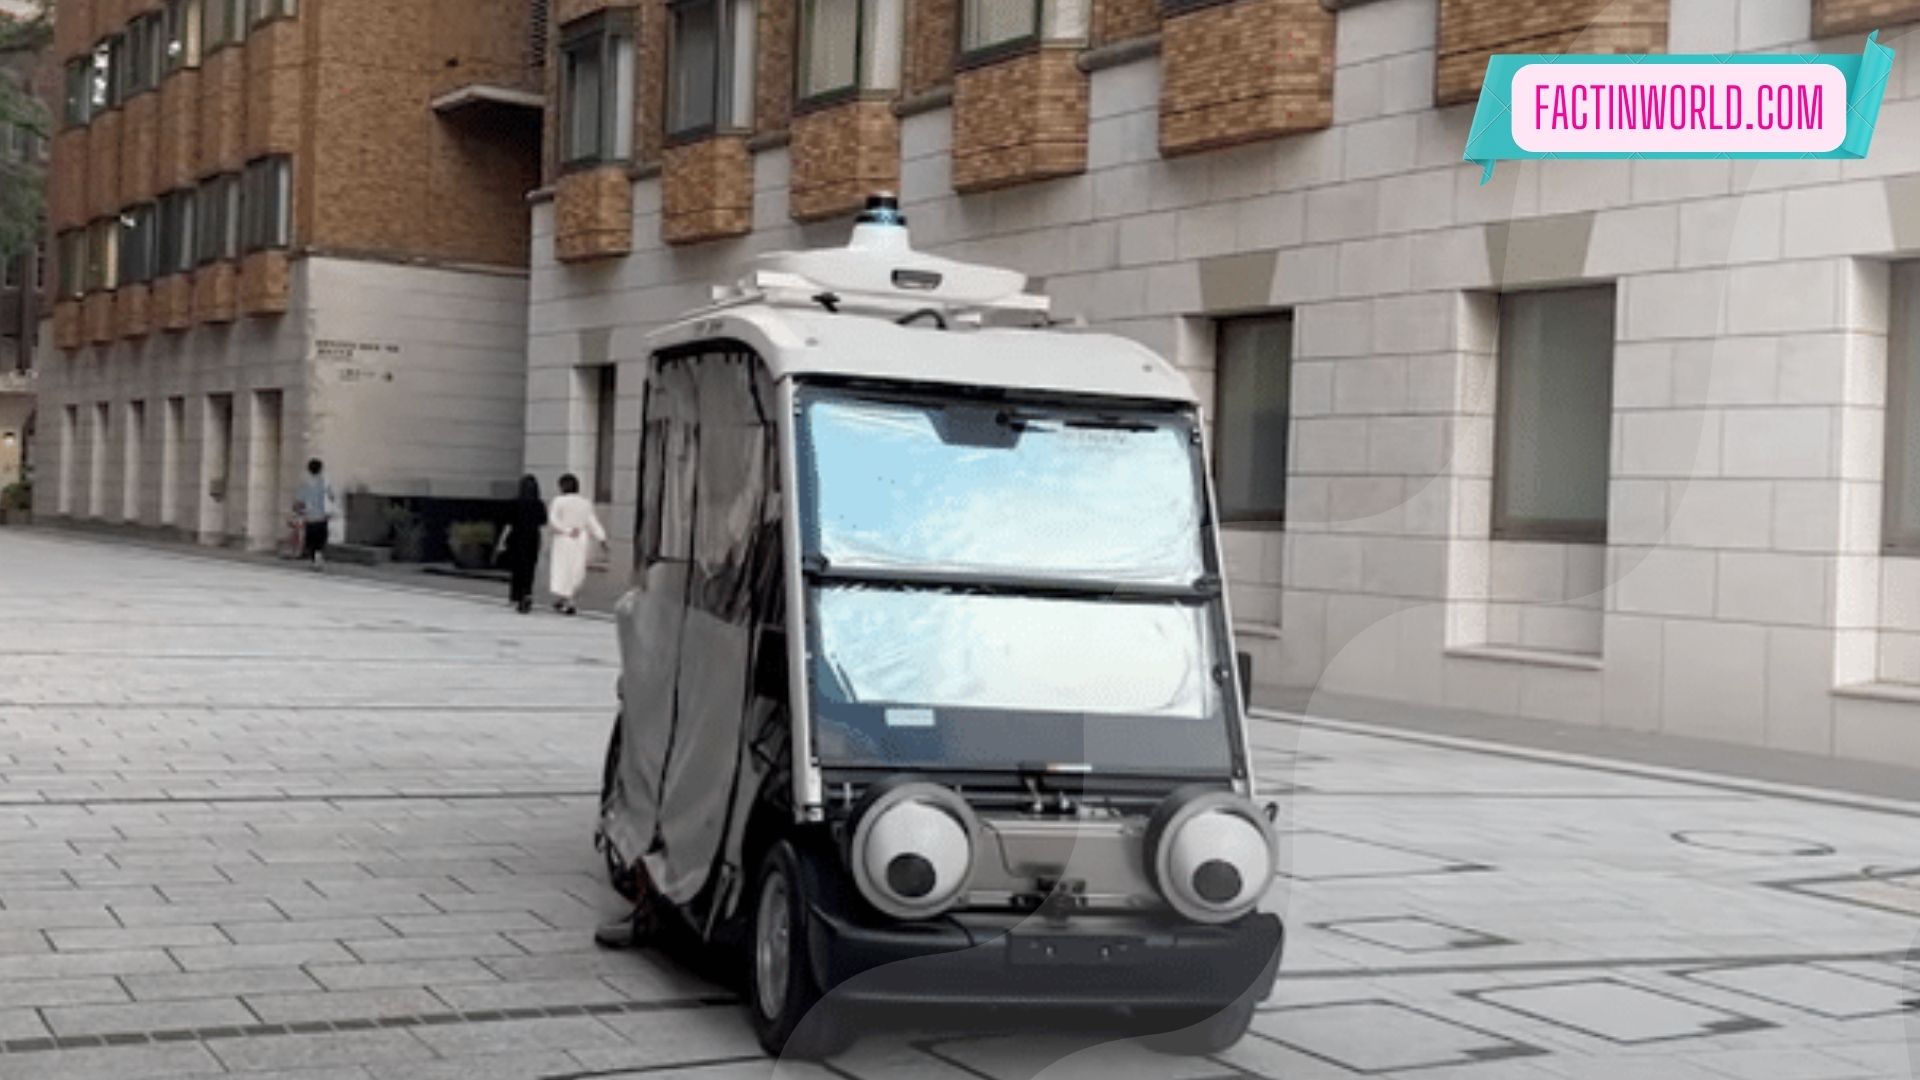 This ‘gazing car’ World First robotic googly eyes Car